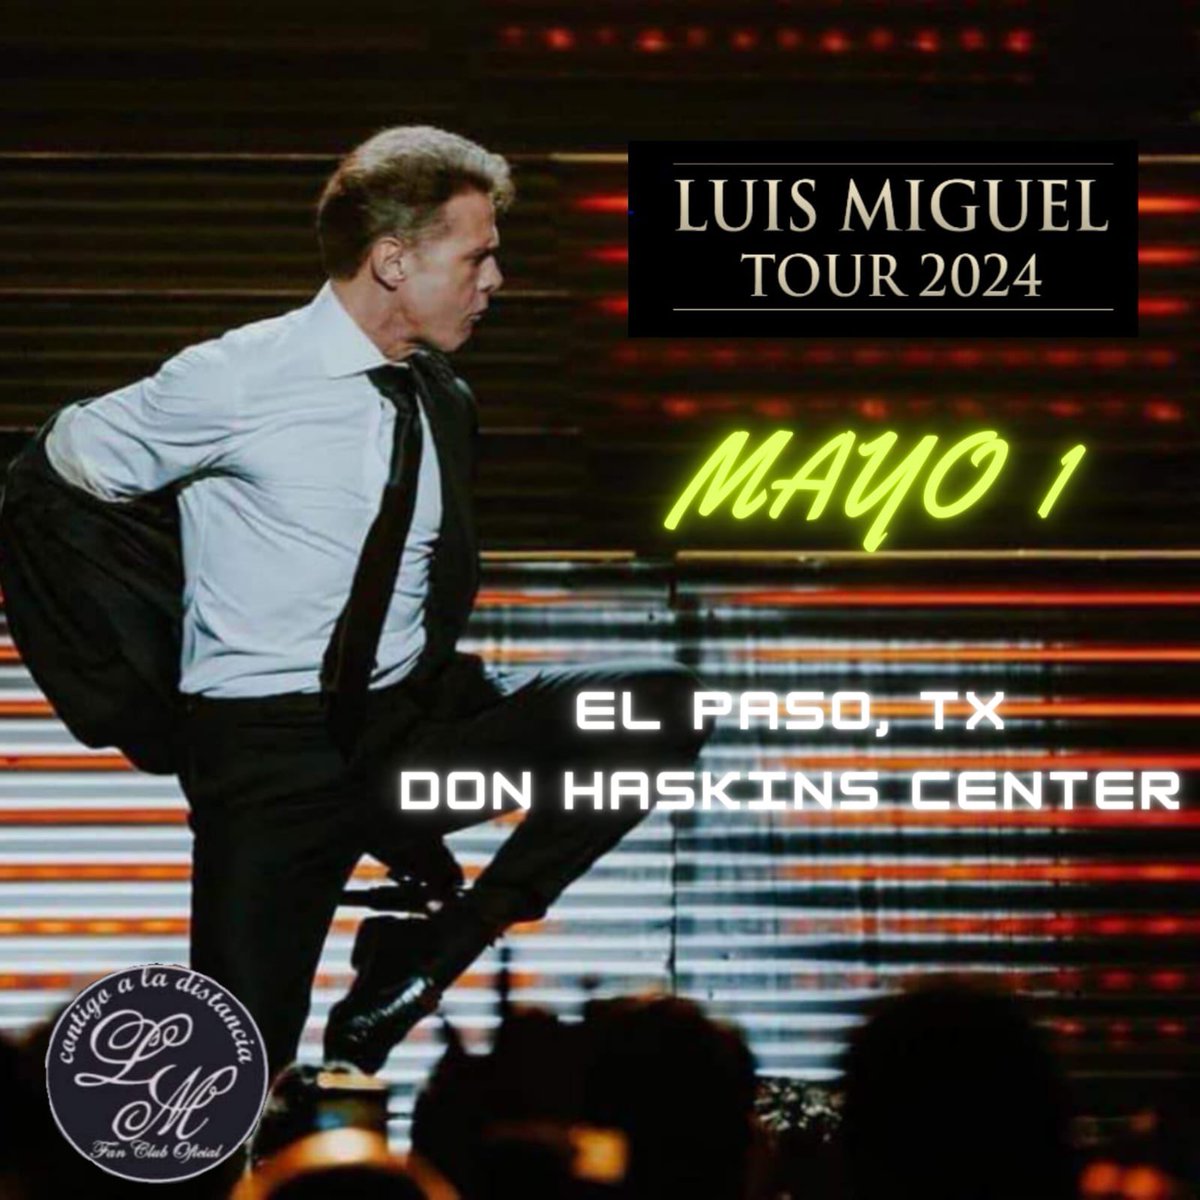 Show no. 108 #LuisMiguelTour2024  #LuisMiguelEnUSA @LMXLM #LuisMiguelEnConcierto #LuisMiguel42añosdetrayectoria    El Paso, Texas, Don Haskins Center #ContigoAlaDistanciaMicky